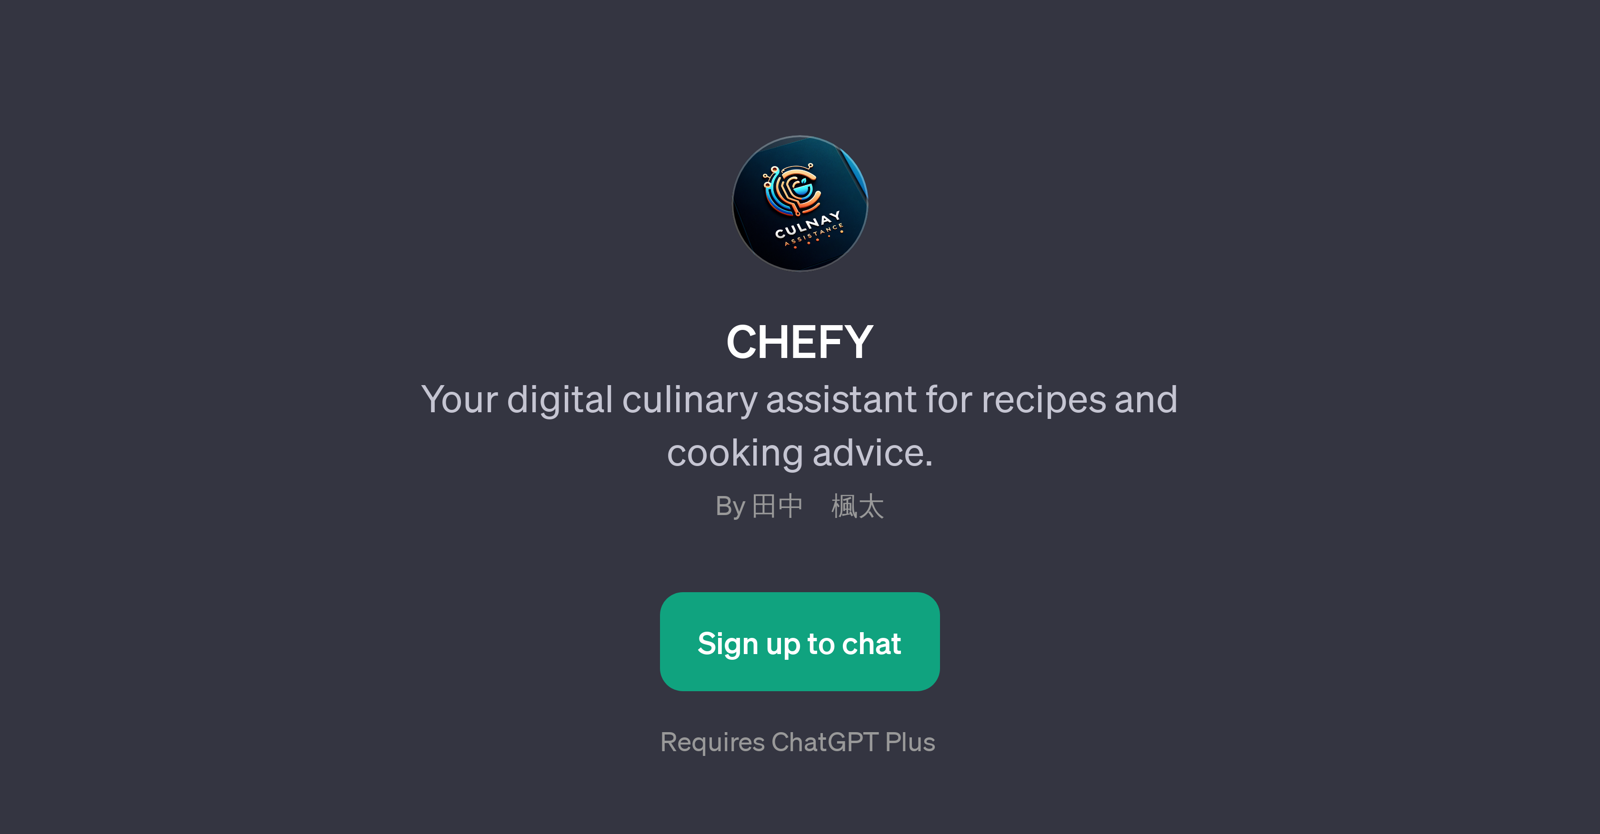 CHEFY website